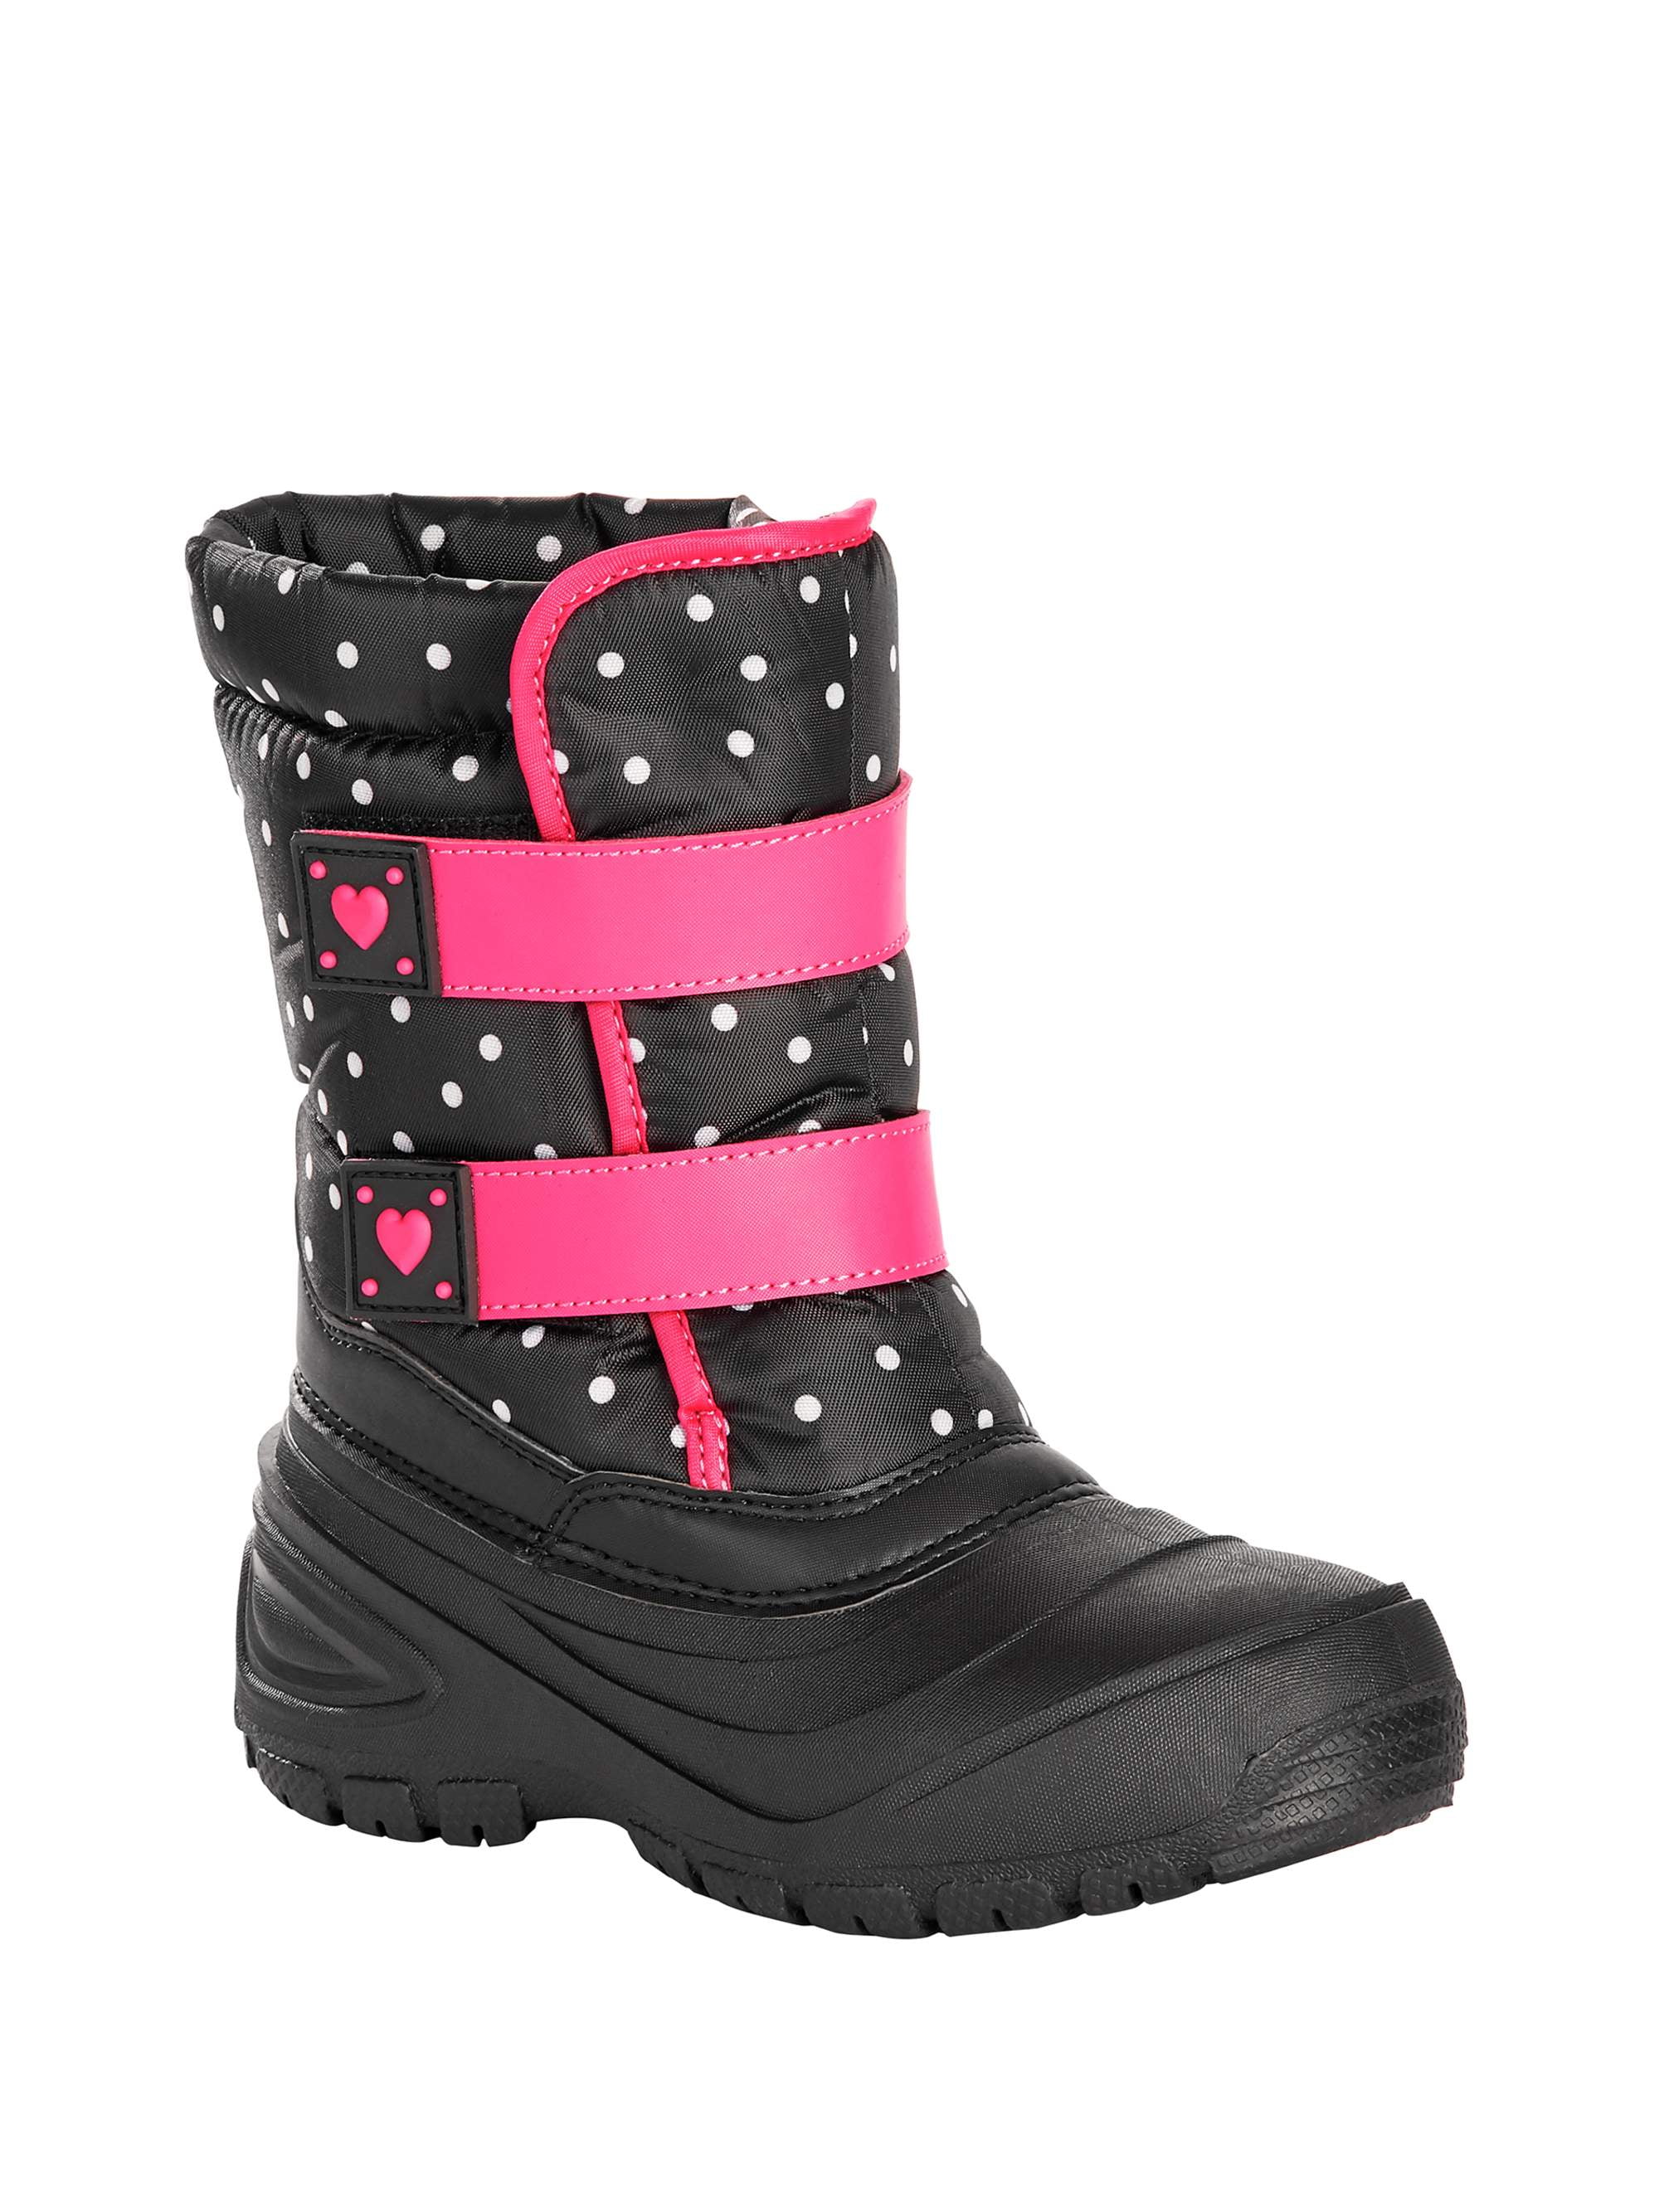 Wonder Nation Toddler Girls? Polka Dot Two-Strap Snow Boots - Walmart.com